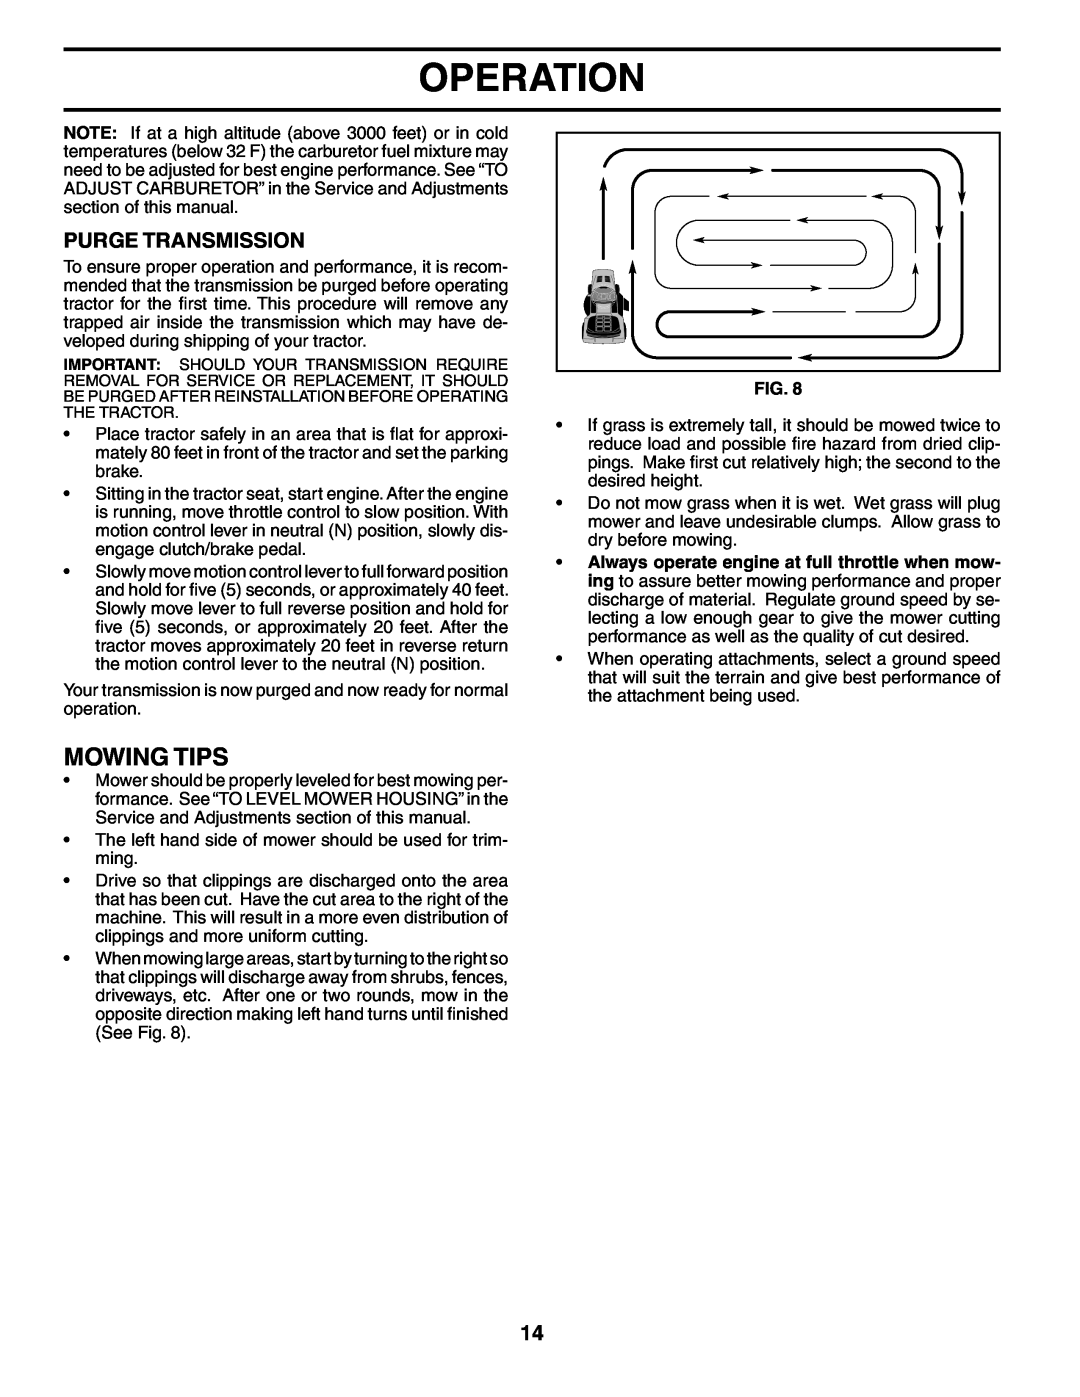 Poulan 194563 manual Mowing Tips, Purge Transmission, Operation 